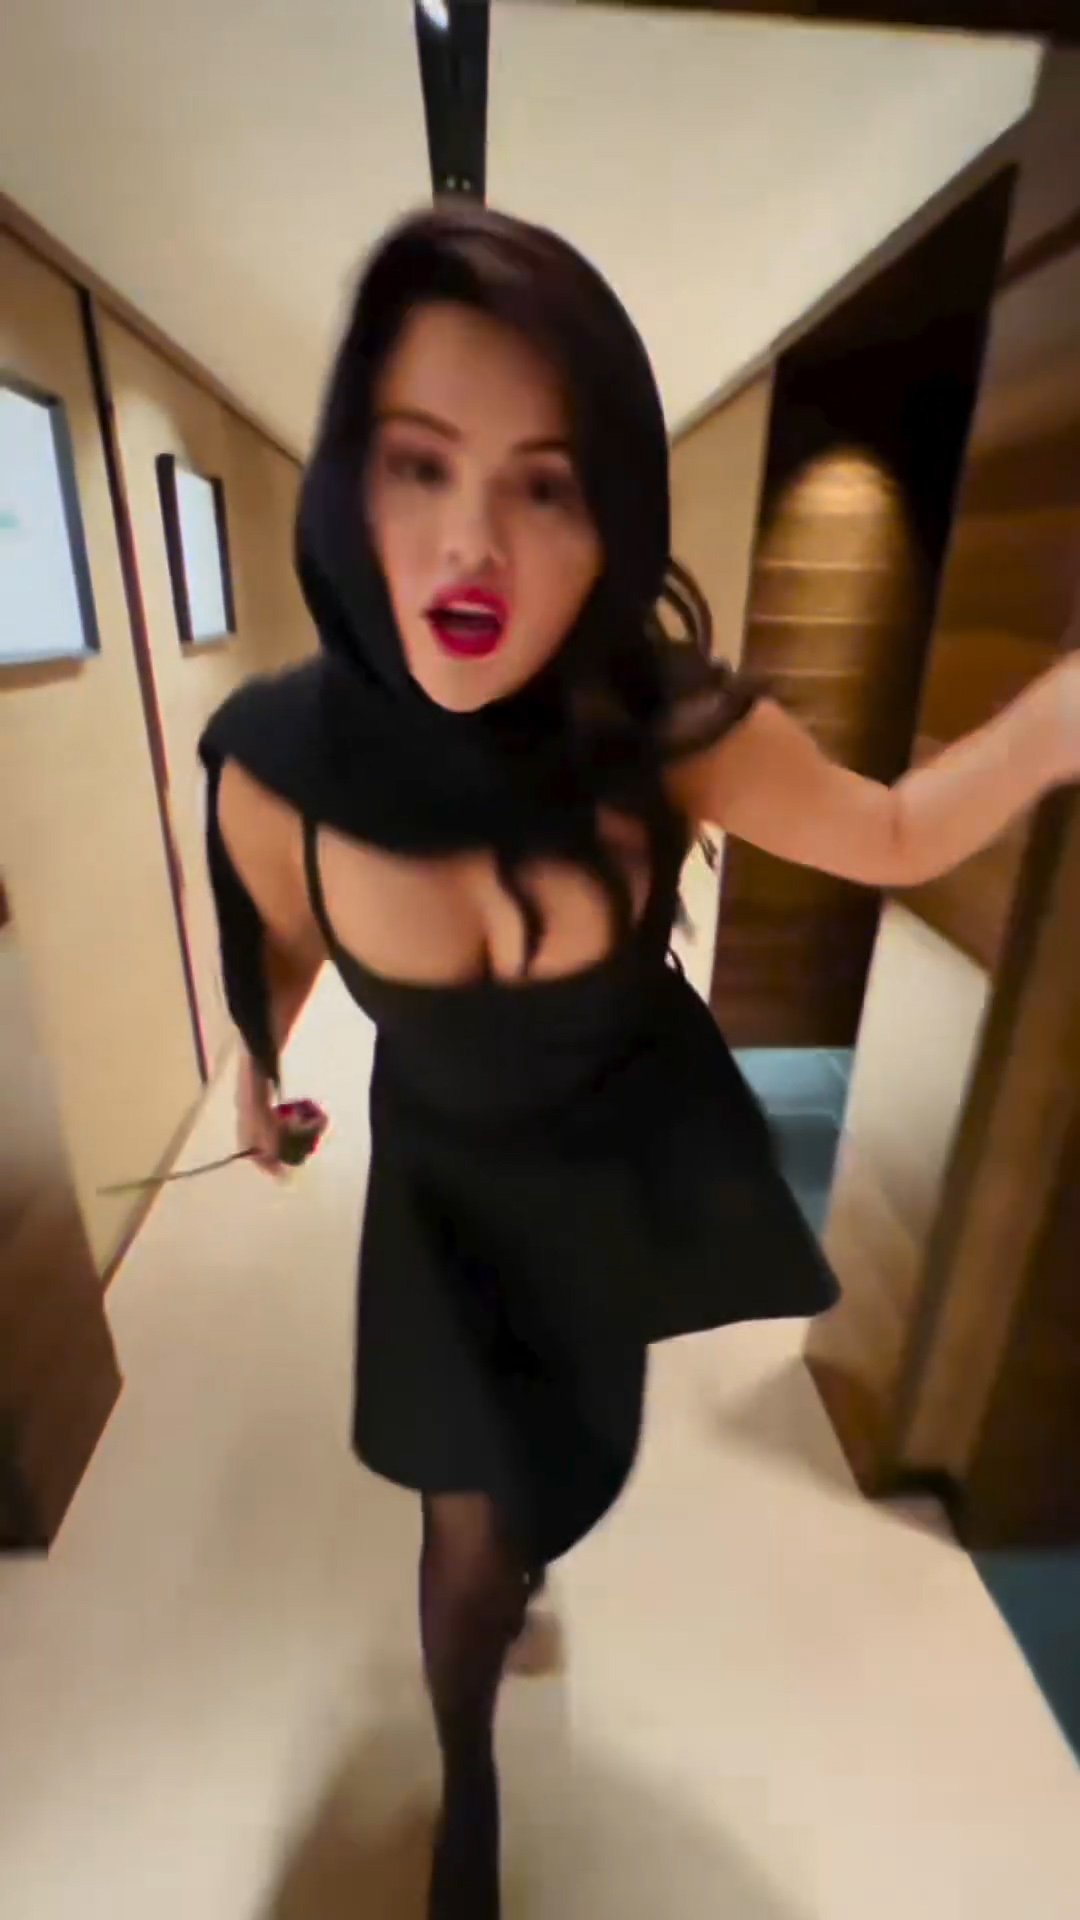 Selena wore a black dress as she walked across the hallways